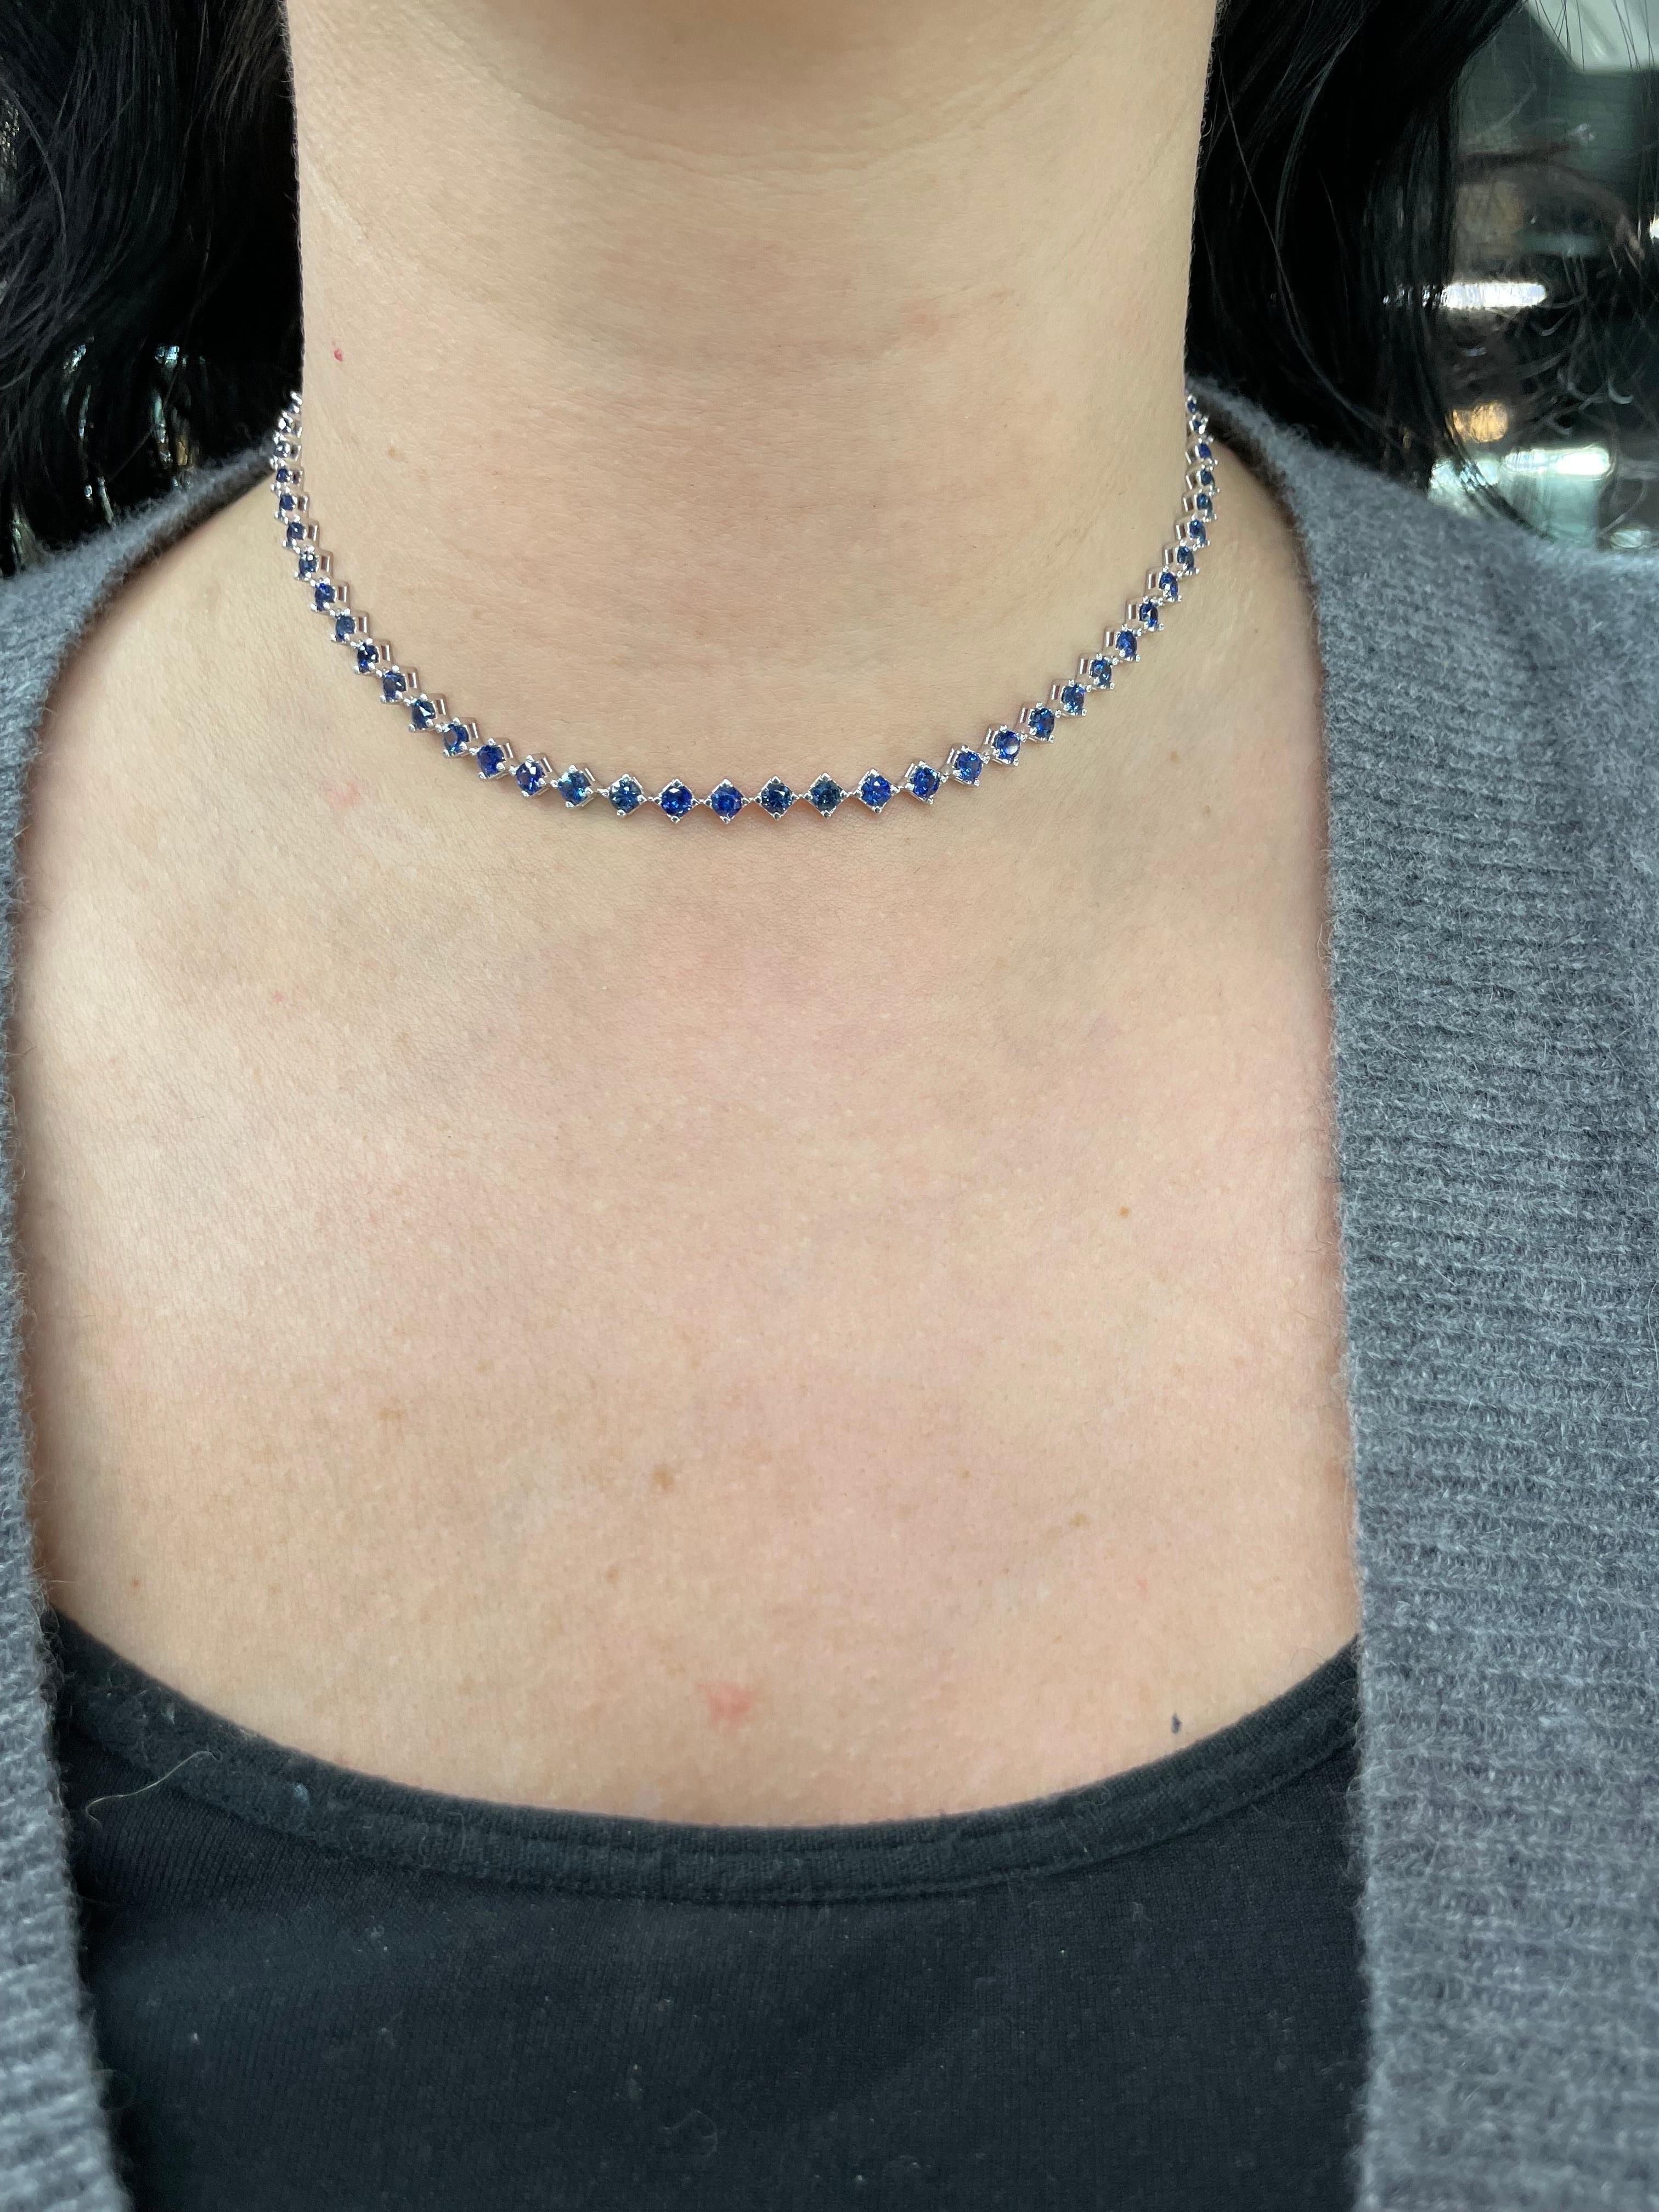 Blue Sapphire Choker Necklace & Bracelet 14 Karat White Gold 6.06 Carats 10